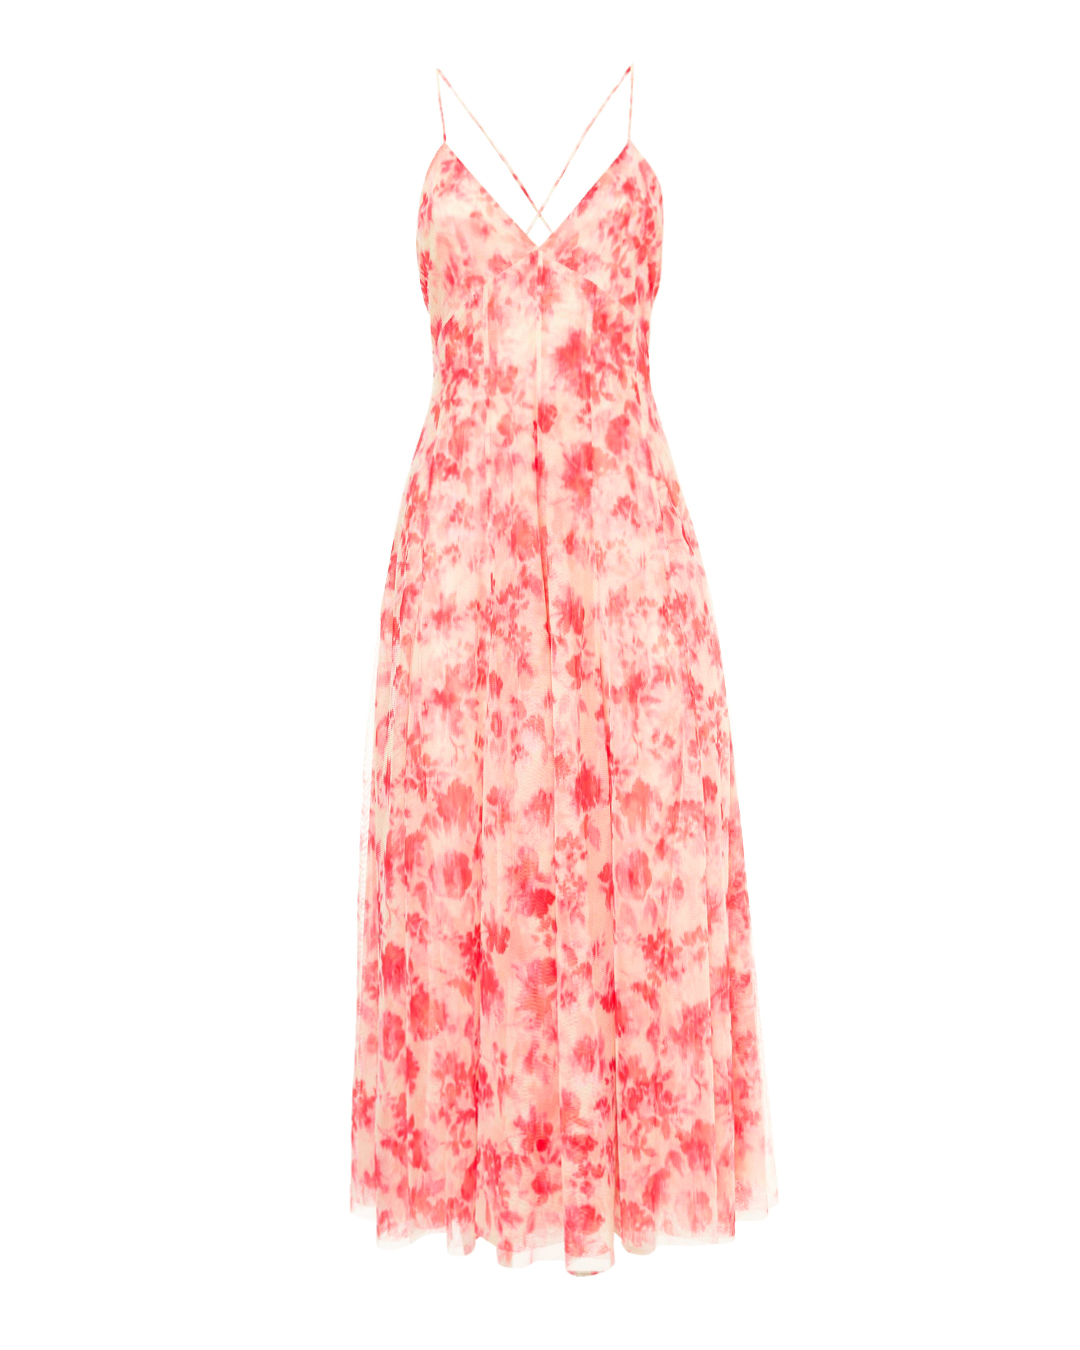 платье PHILOSOPHY DI LORENZO SERAFINI A0411.24 розовый+бежевый 38, размер 38, цвет розовый+бежевый A0411.24 розовый+бежевый 38 - фото 1